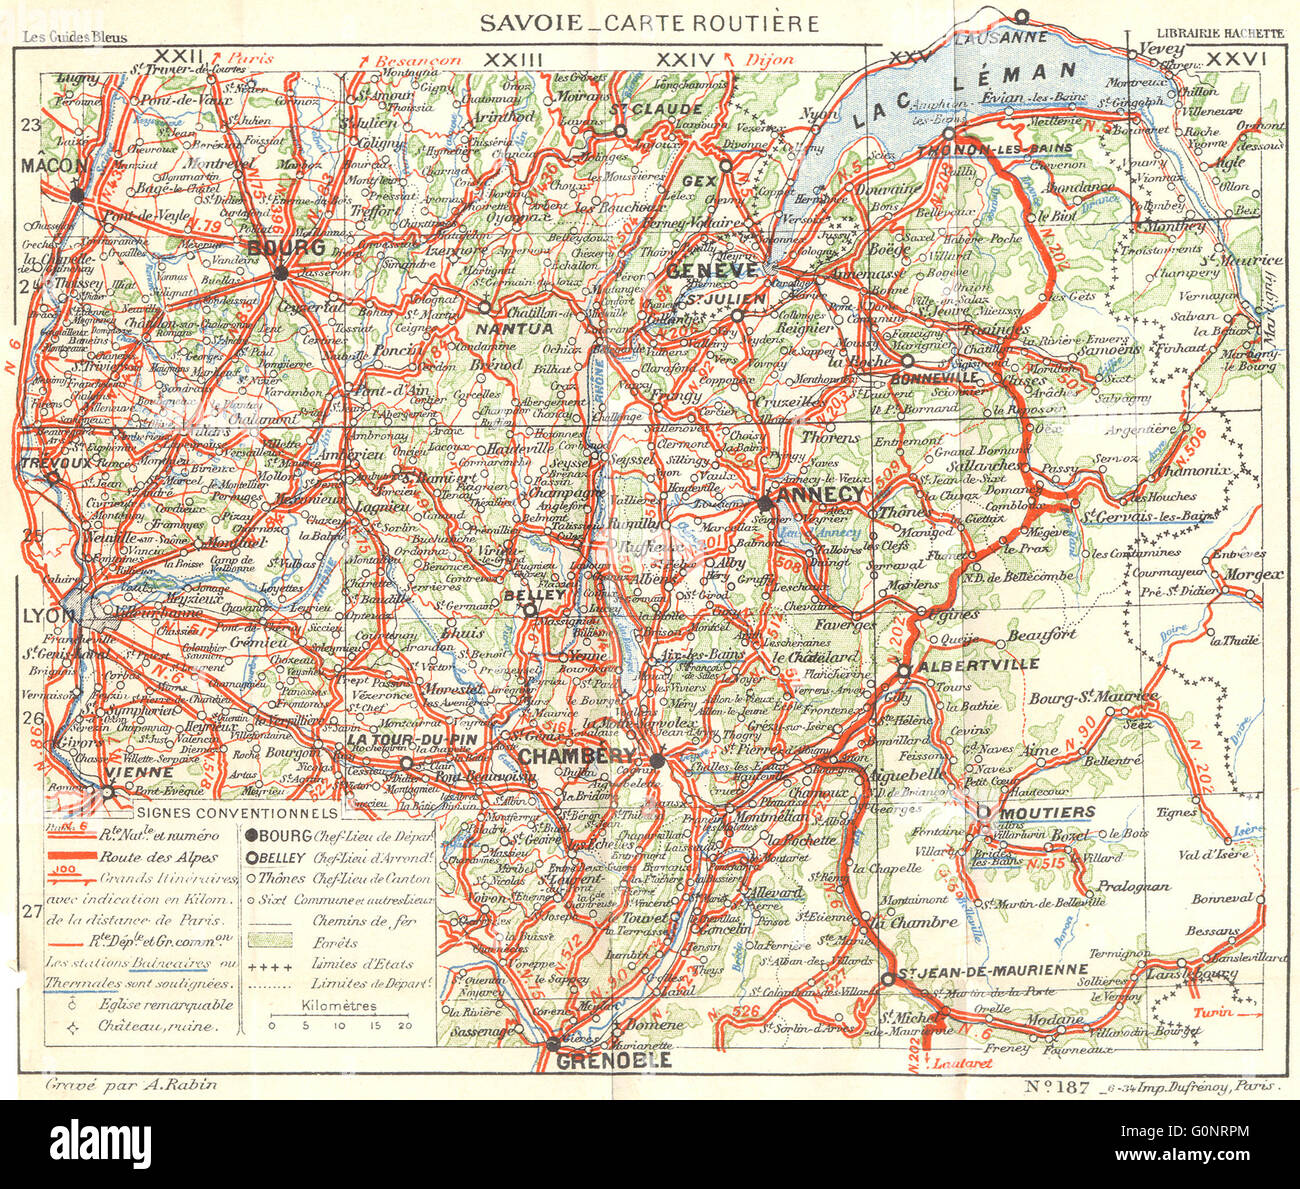 carte routiere savoie SAVOIE: Carte Routiere, 1934 vintage map Stock Photo   Alamy